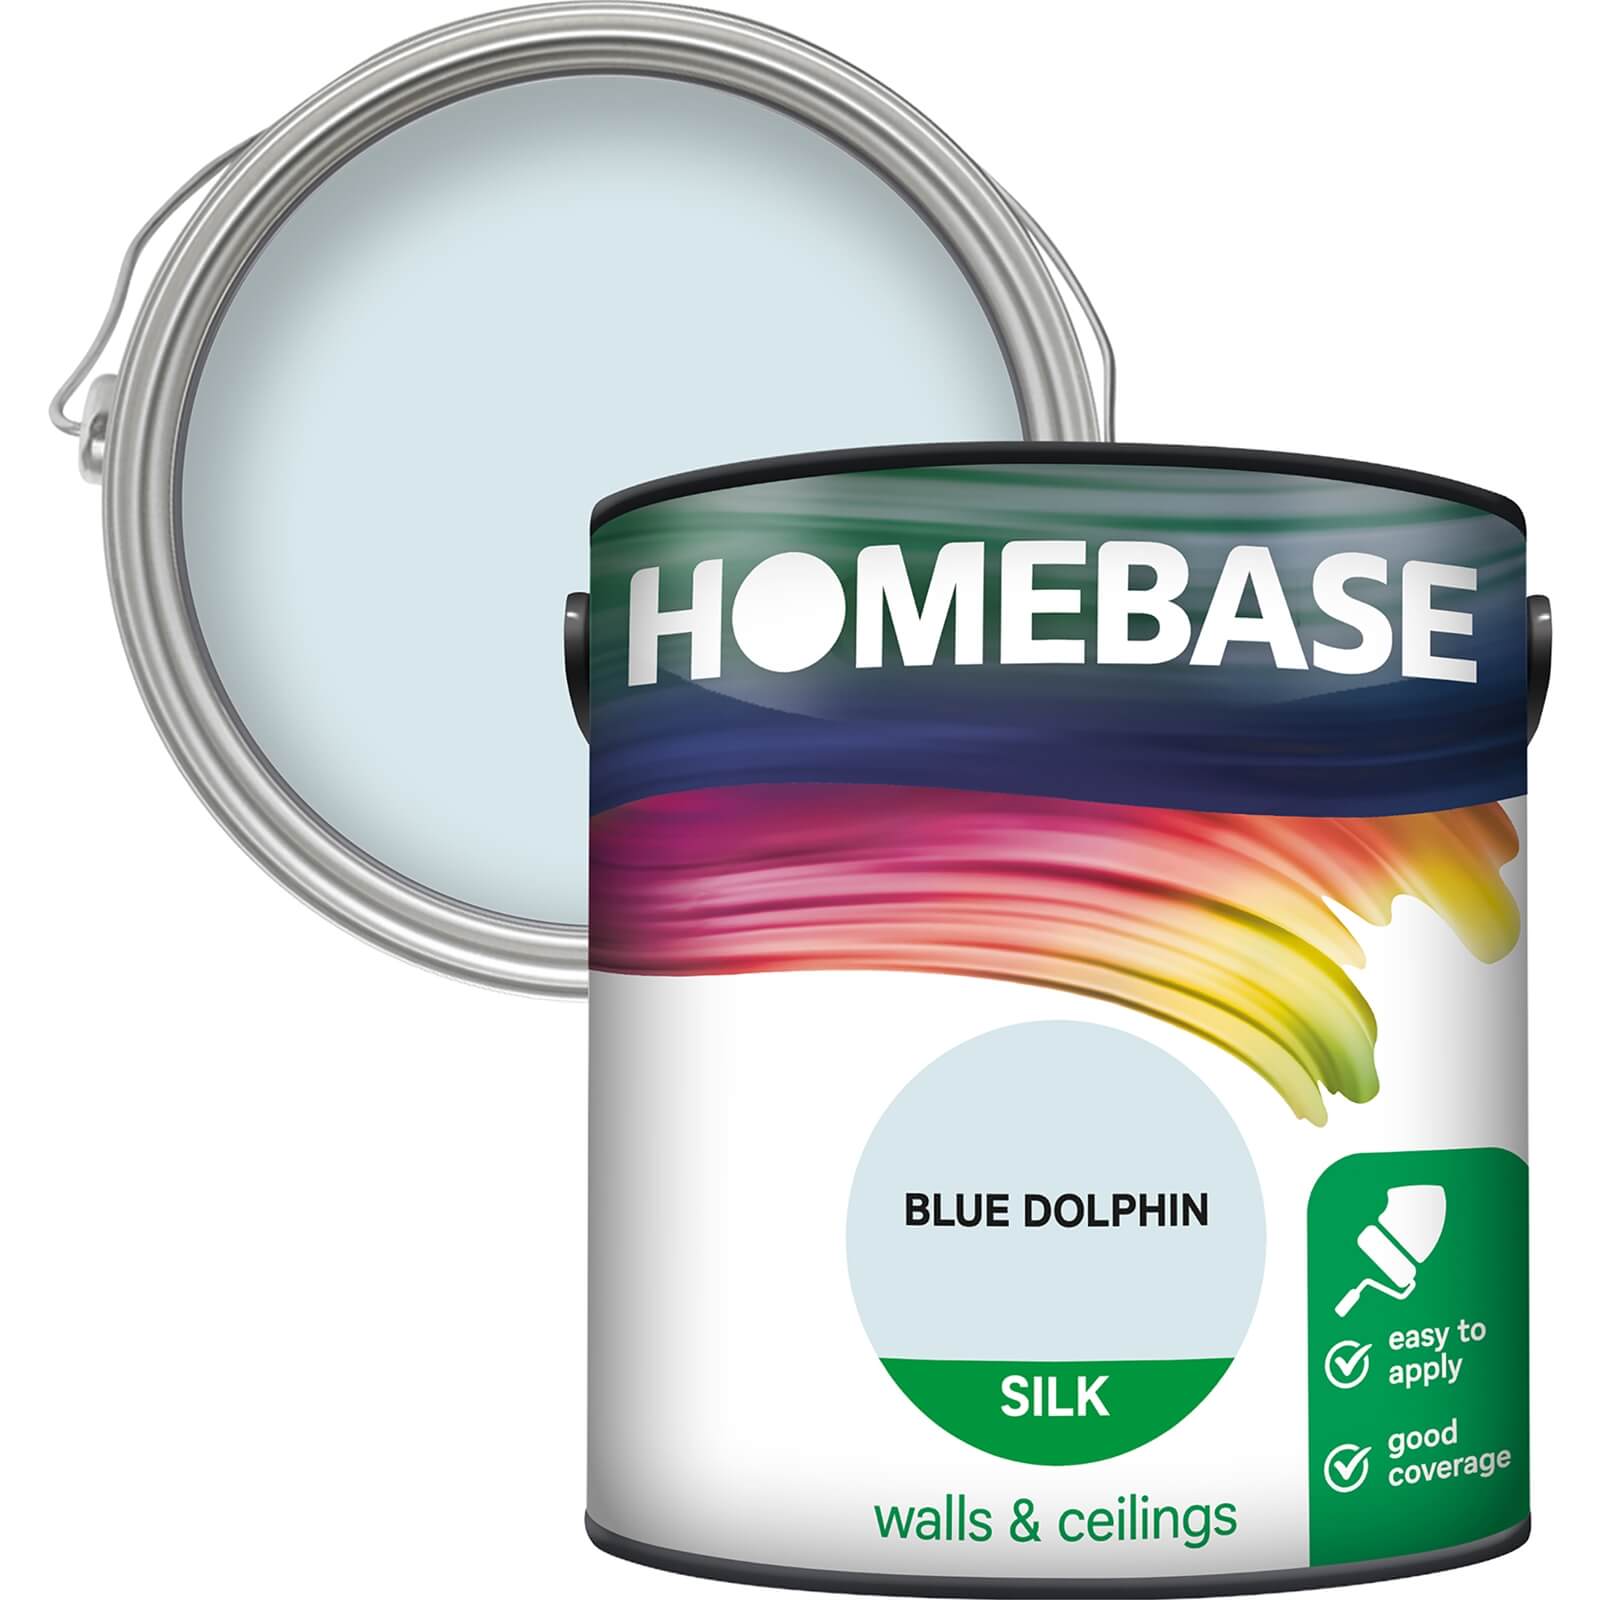 Homebase Silk Emulsion Paint Blue Dolphin - 2.5L